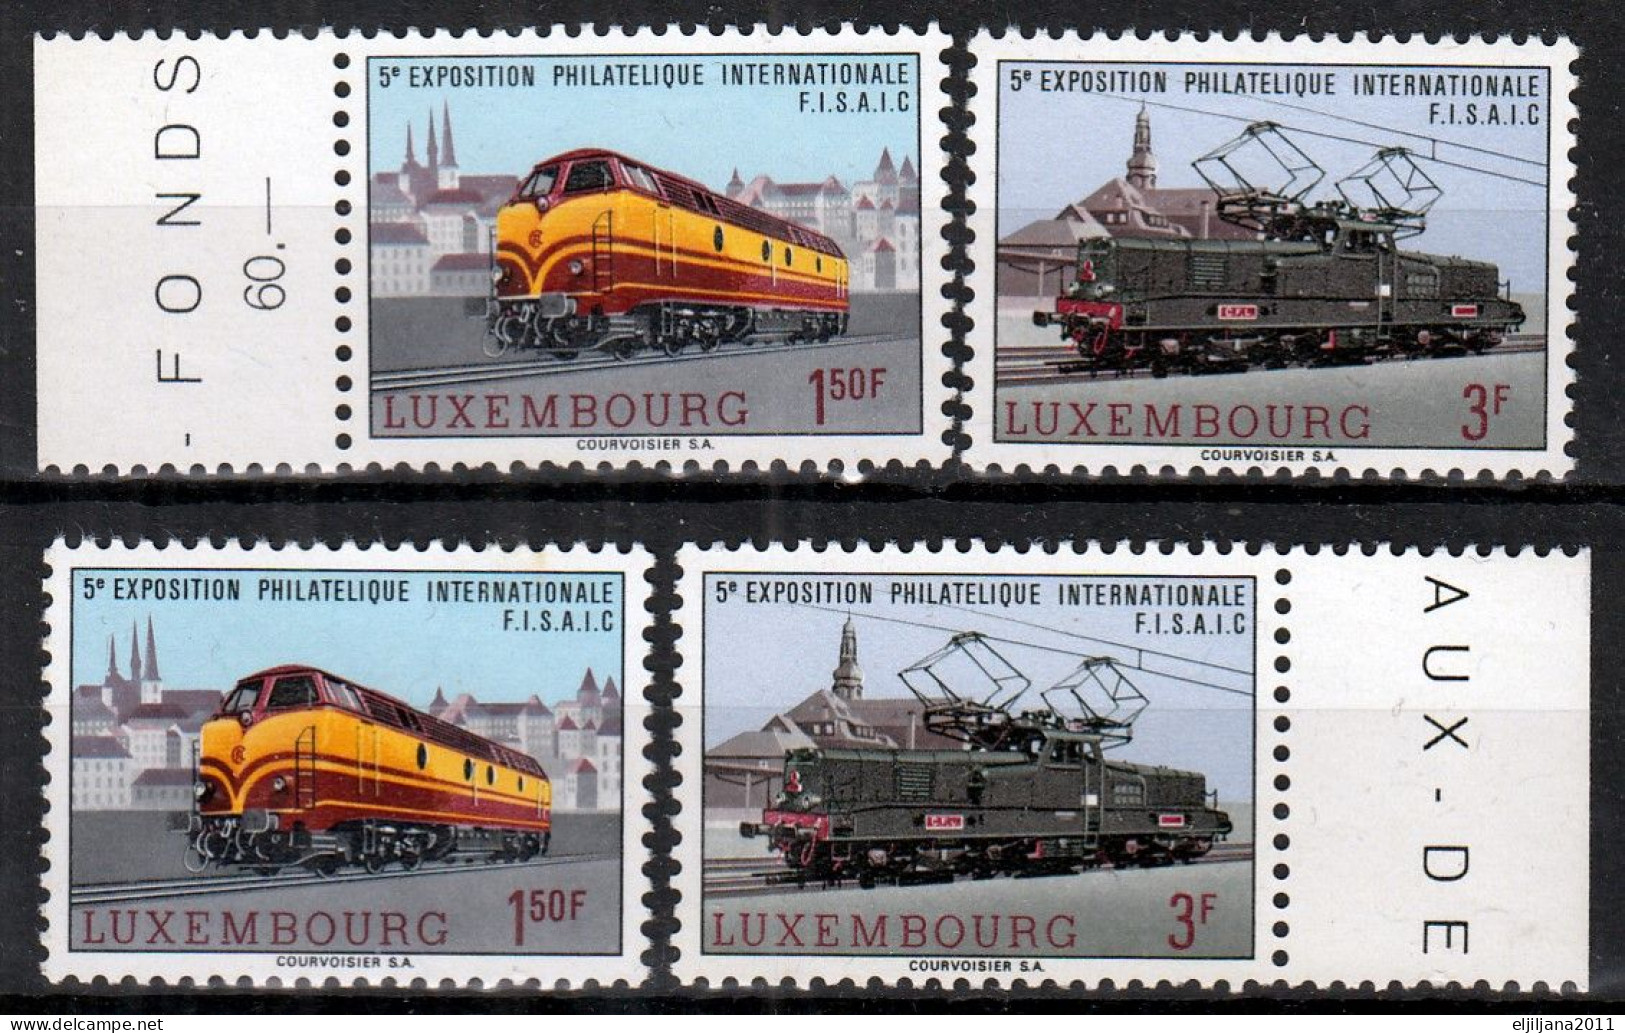 ⁕ LUXEMBOURG 1966 ⁕ Philatelic Exhibition FISAIC Railway Workers Philatelists Mi.735-736 X2⁕ 4v MNH - Neufs